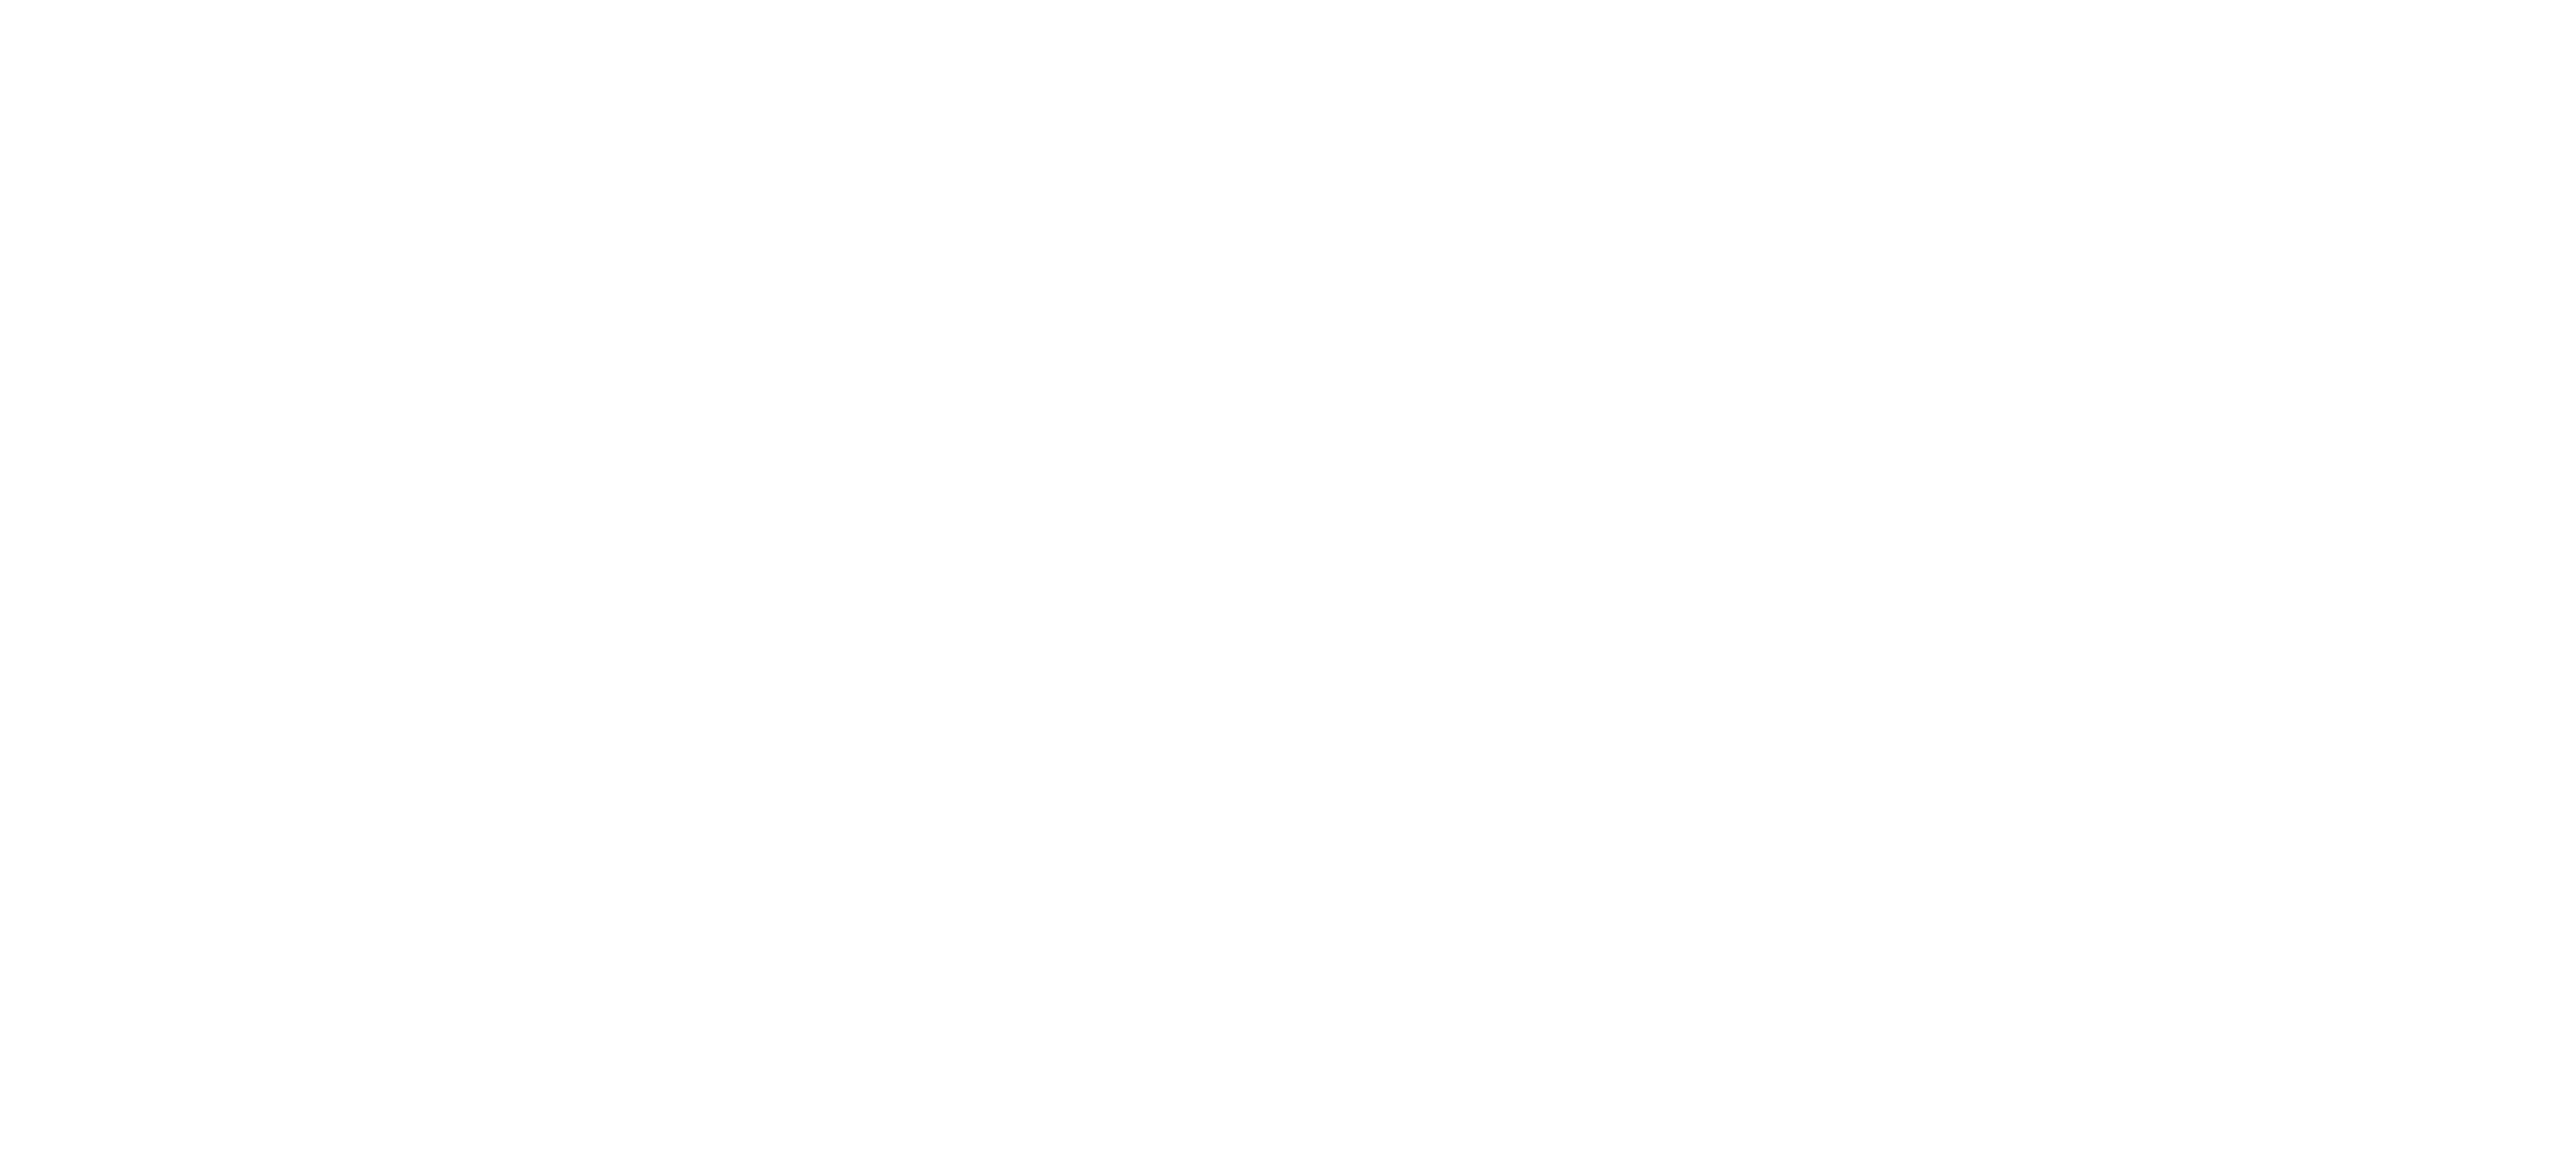 aviothic